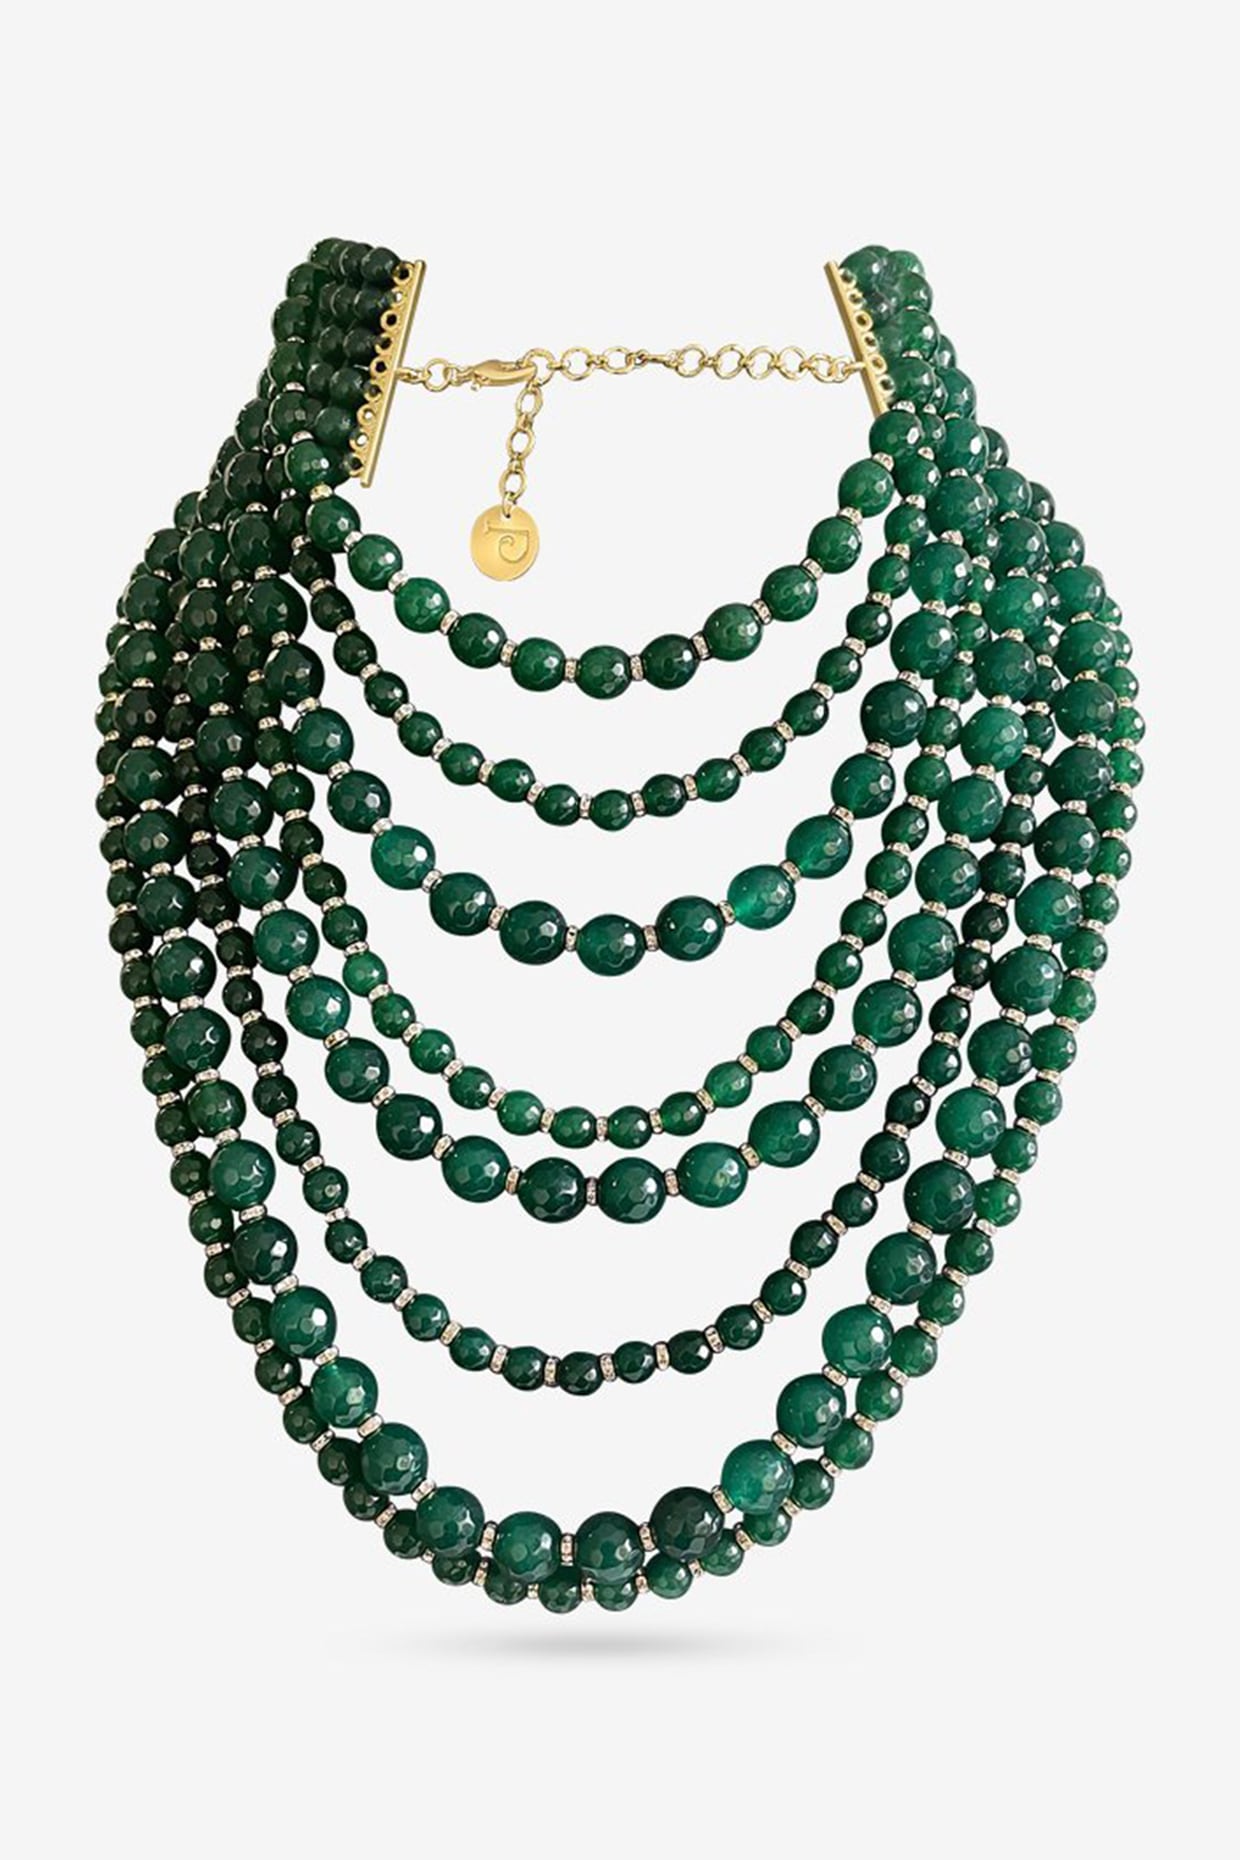 Rare Natural Grade AAA Icy Green Jade Jadeite 12mm Beads necklace  Certificate | eBay